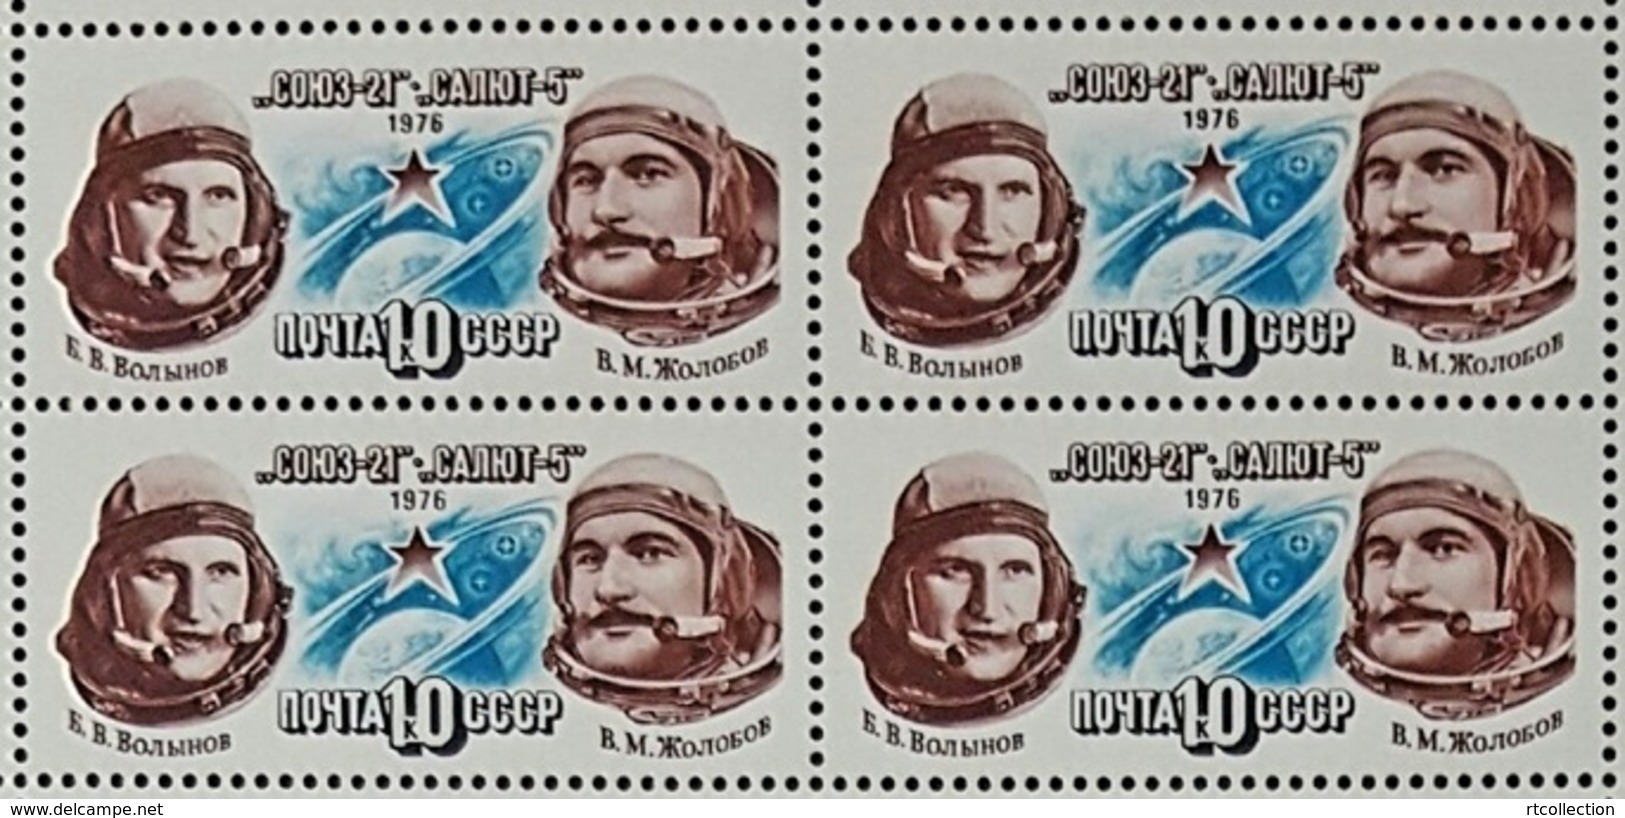 USSR Russia 1976 Block Space Flight Soyuz 21 Spacemen Volynov Zholobov People Sciences Astronaut Cosmonaut Stamps MNH - Russia & USSR